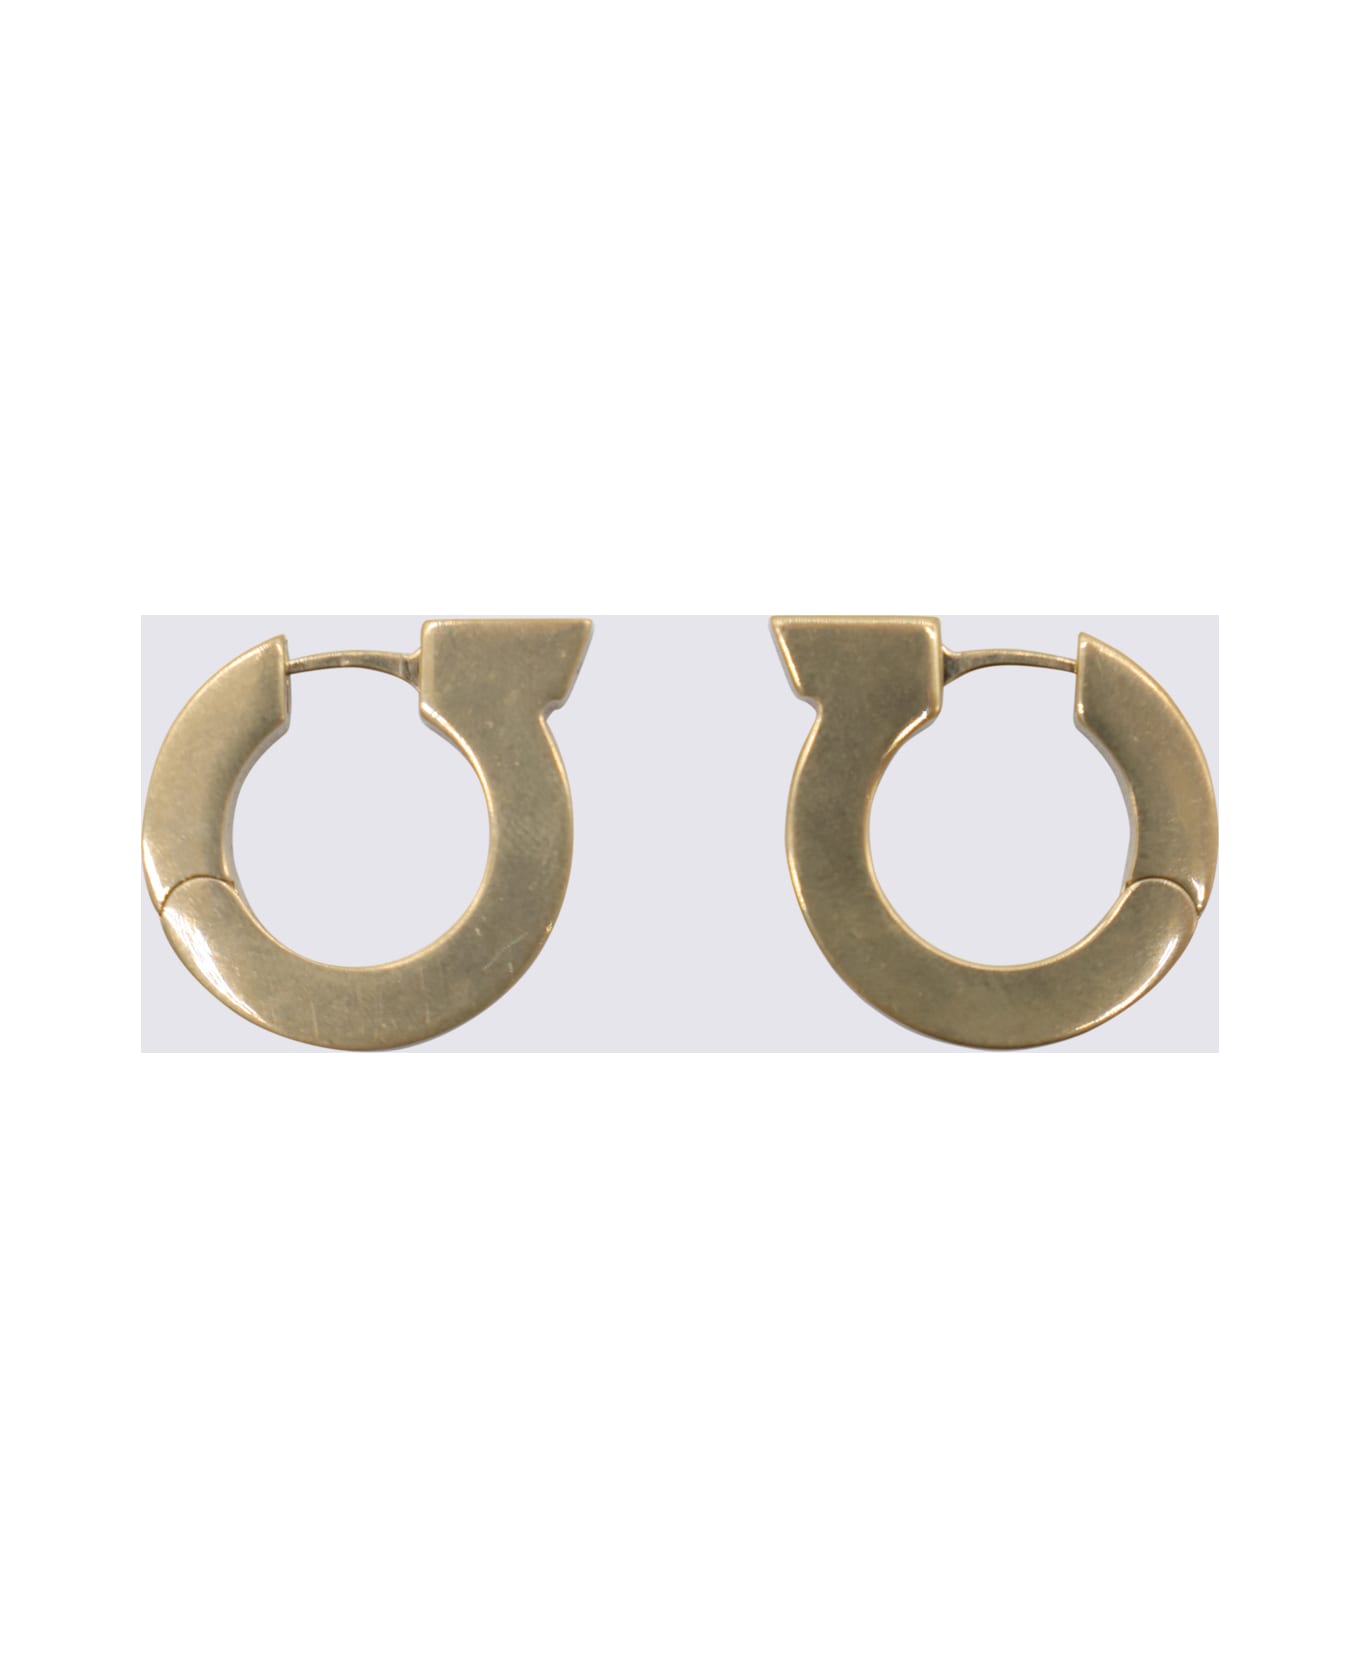 Ferragamo Gold Metal Logo Earrings - Golden イヤリング